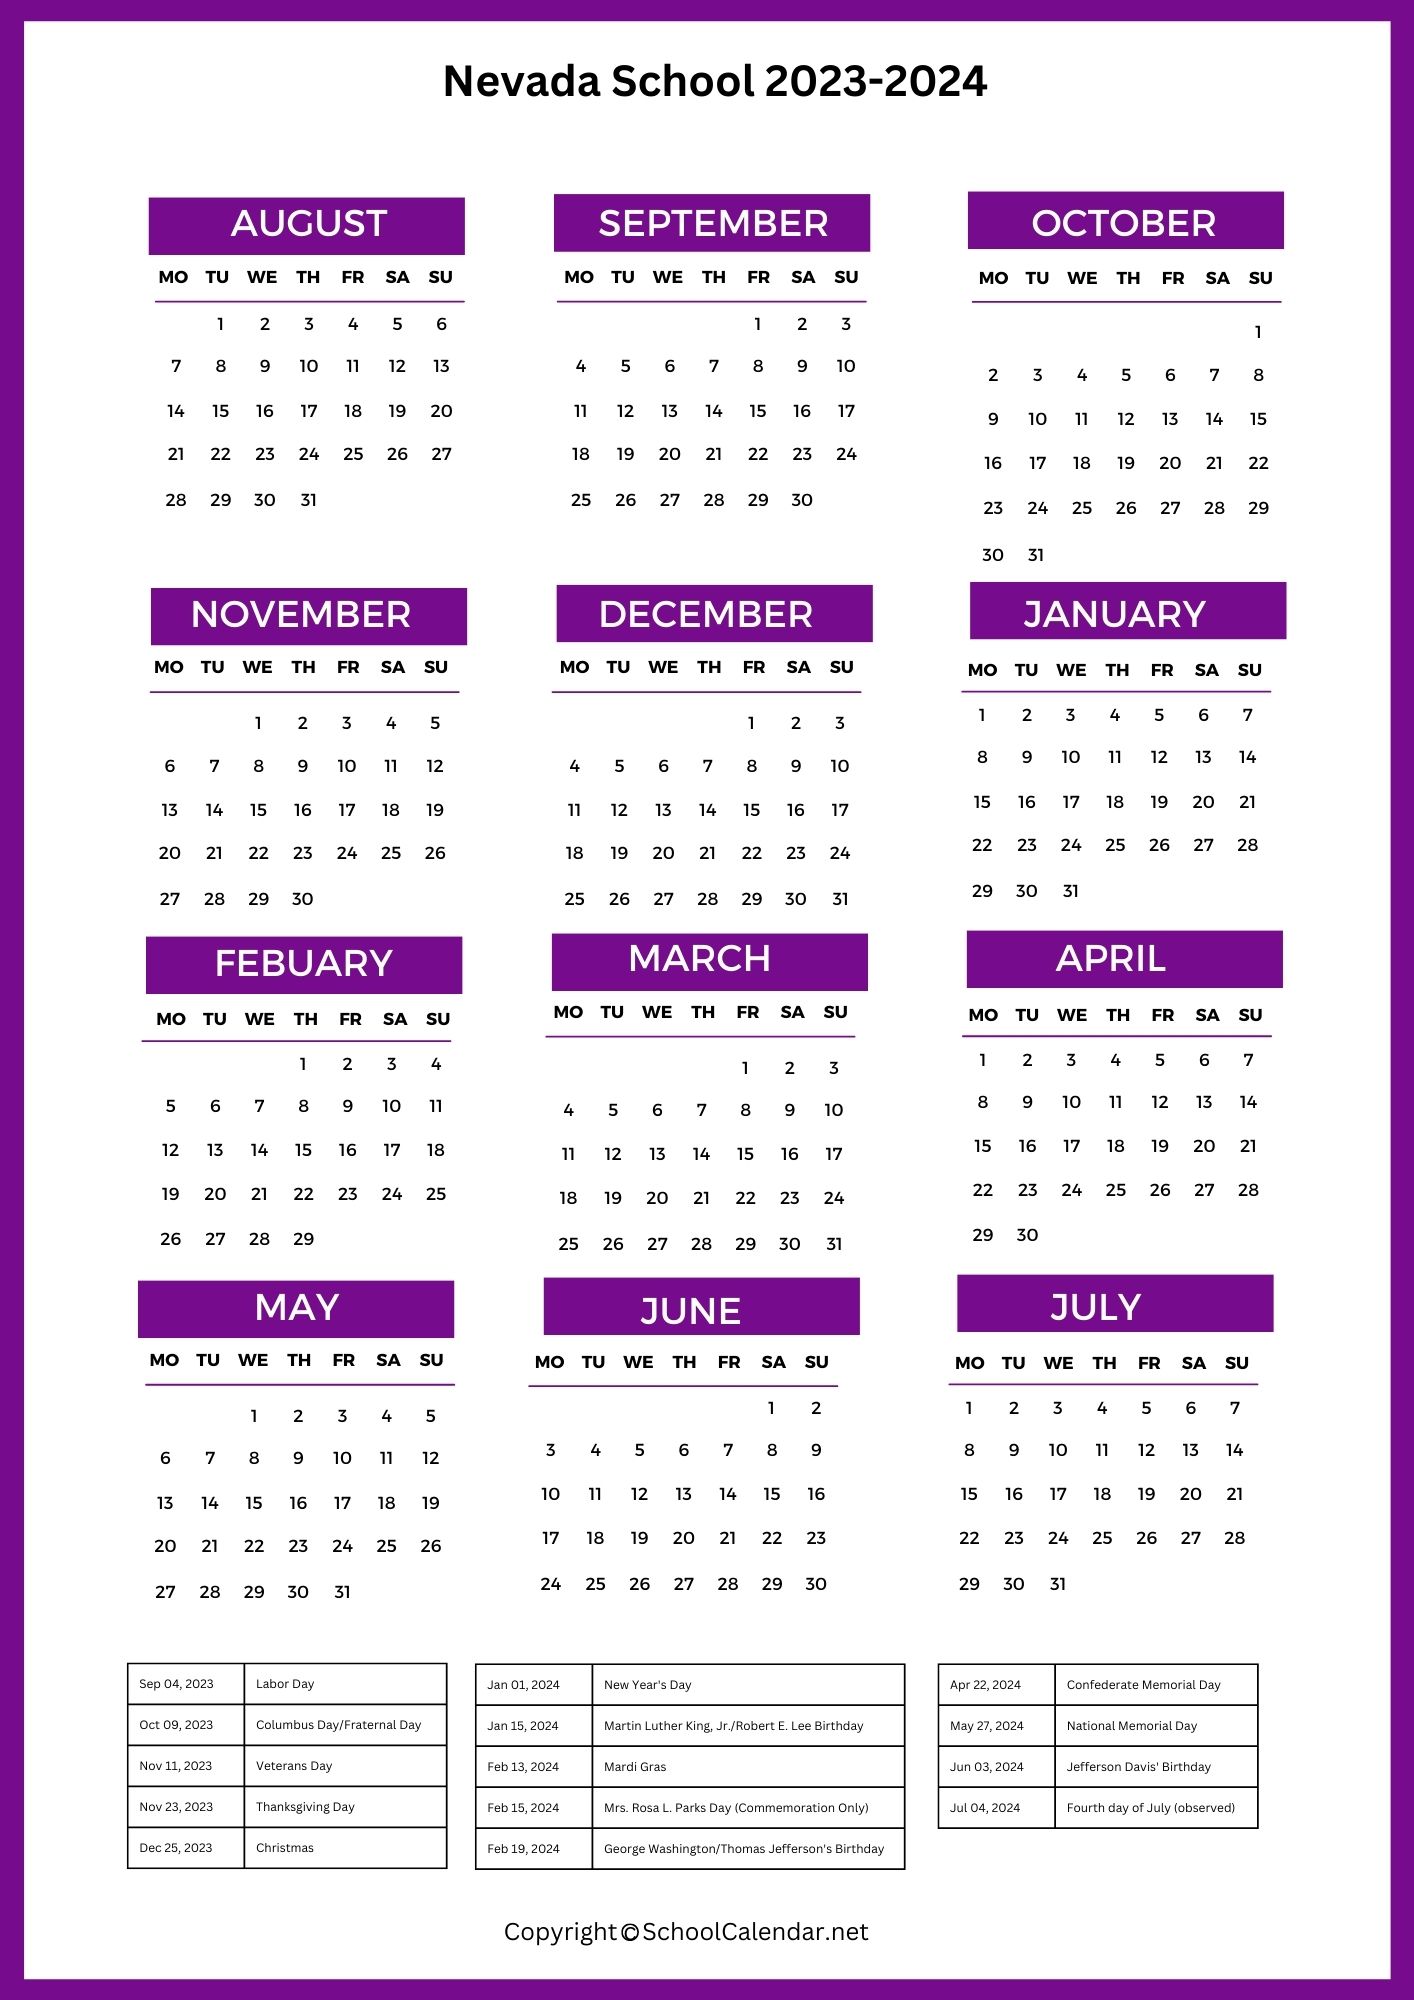 Nevada School Holiday Calendar 2023